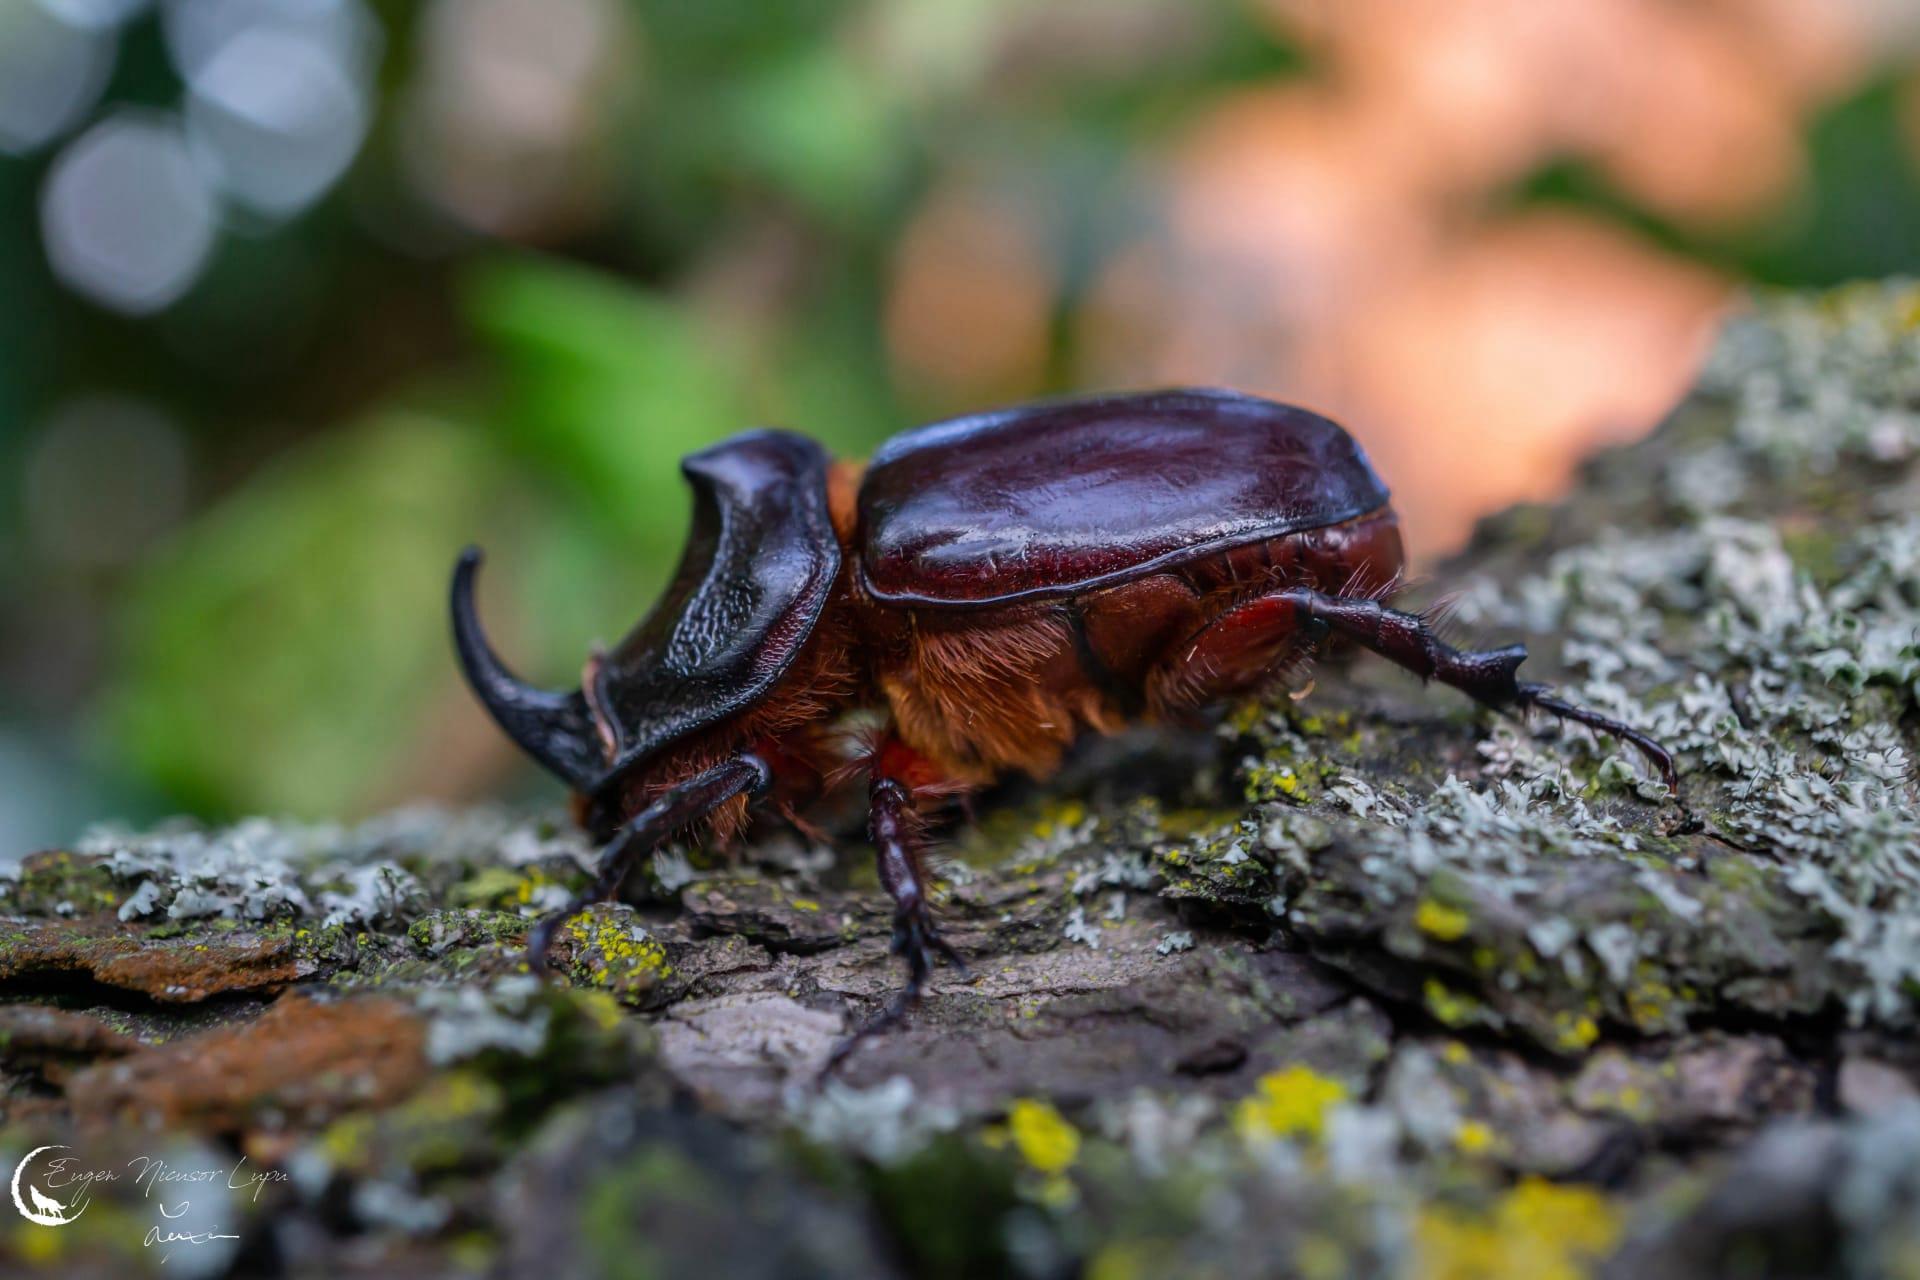 Rhinoceros beetle pictures